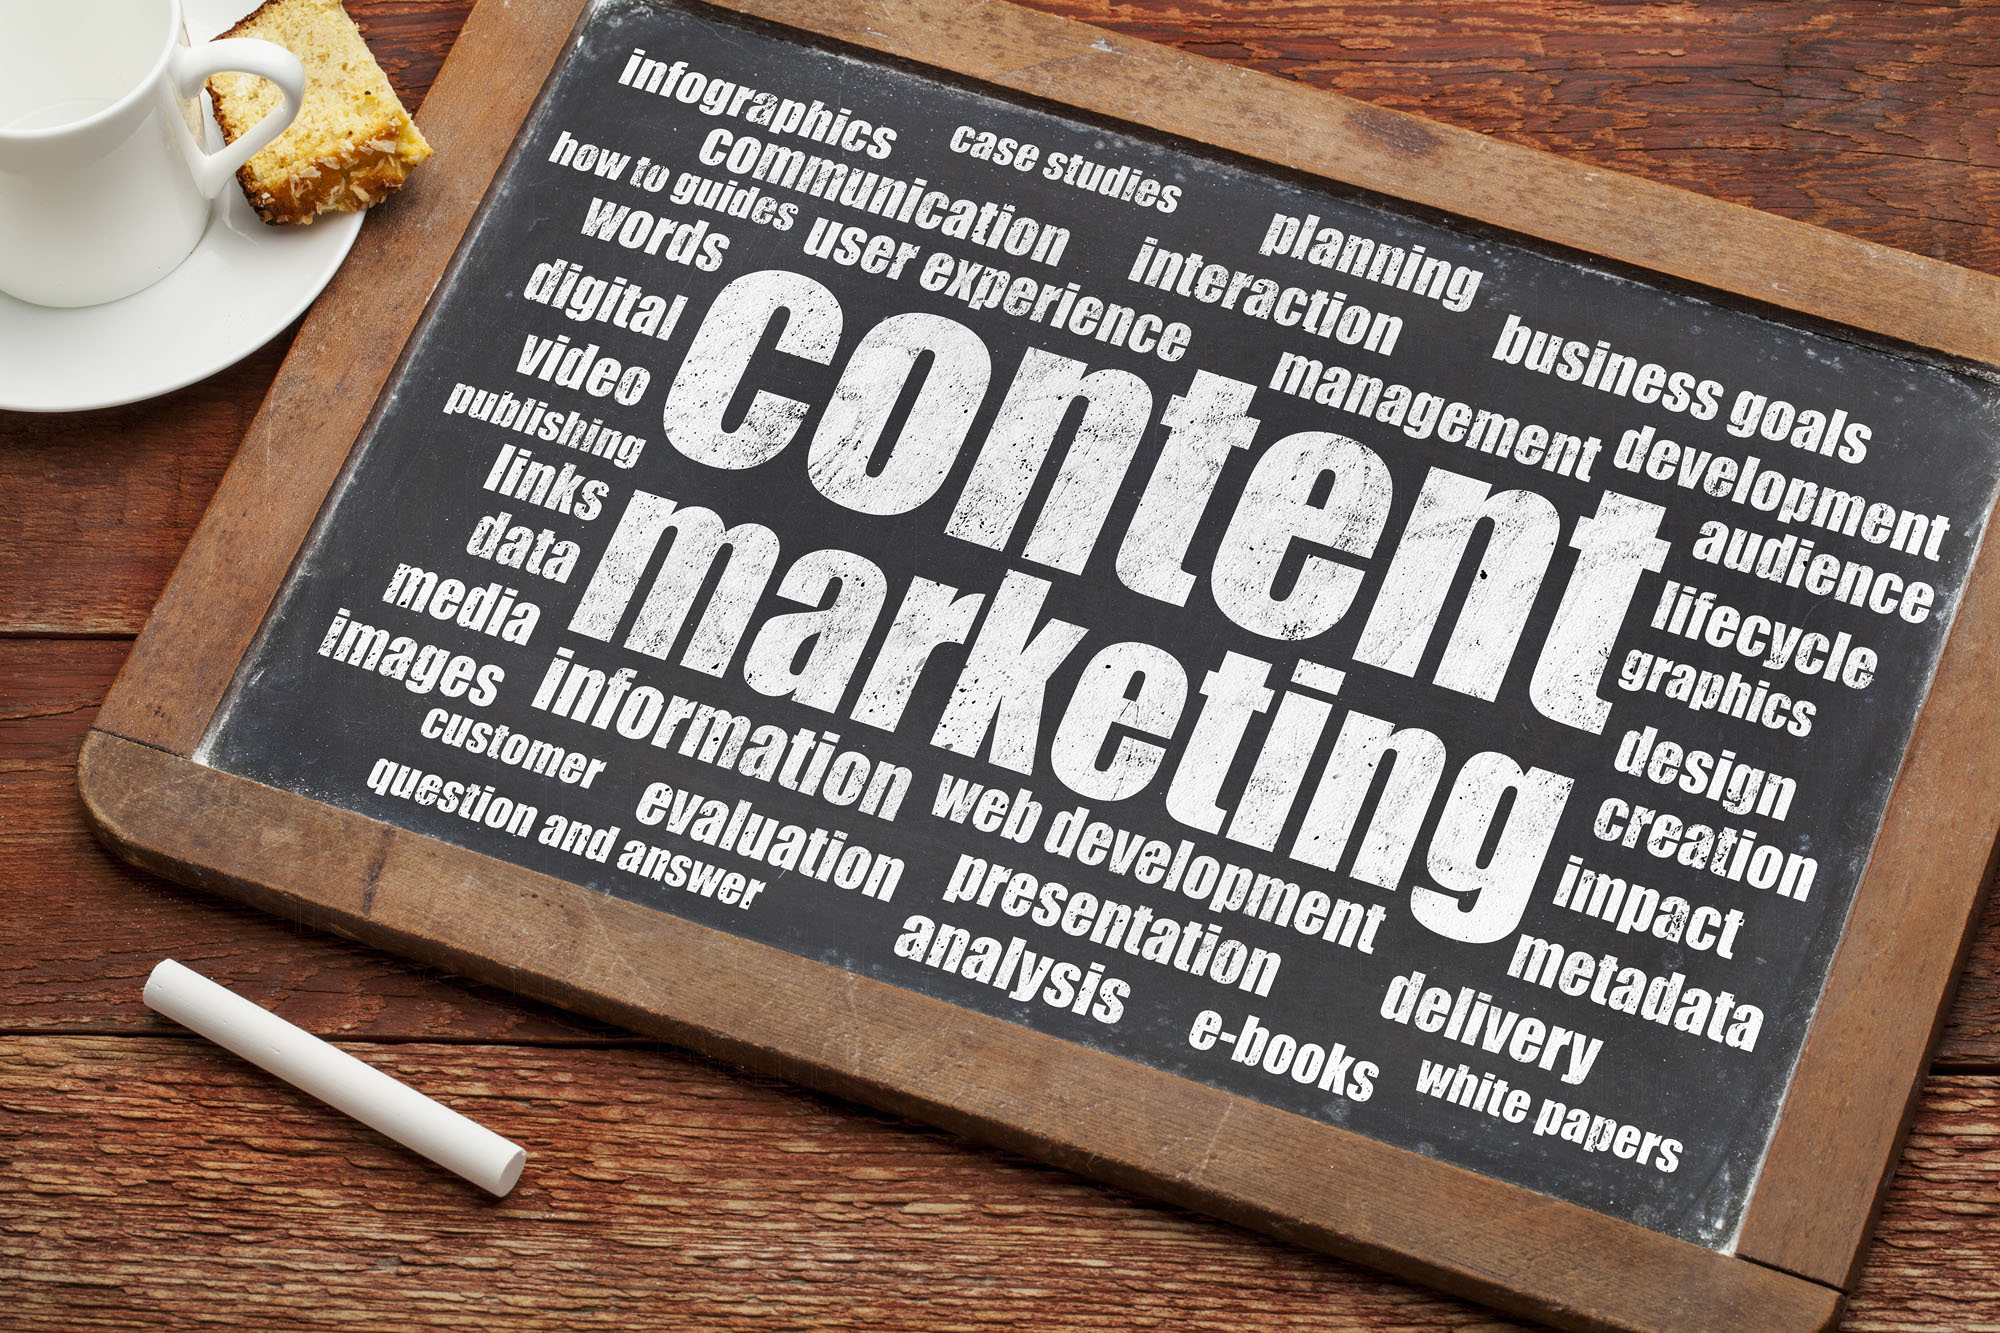 Effective Content Marketing